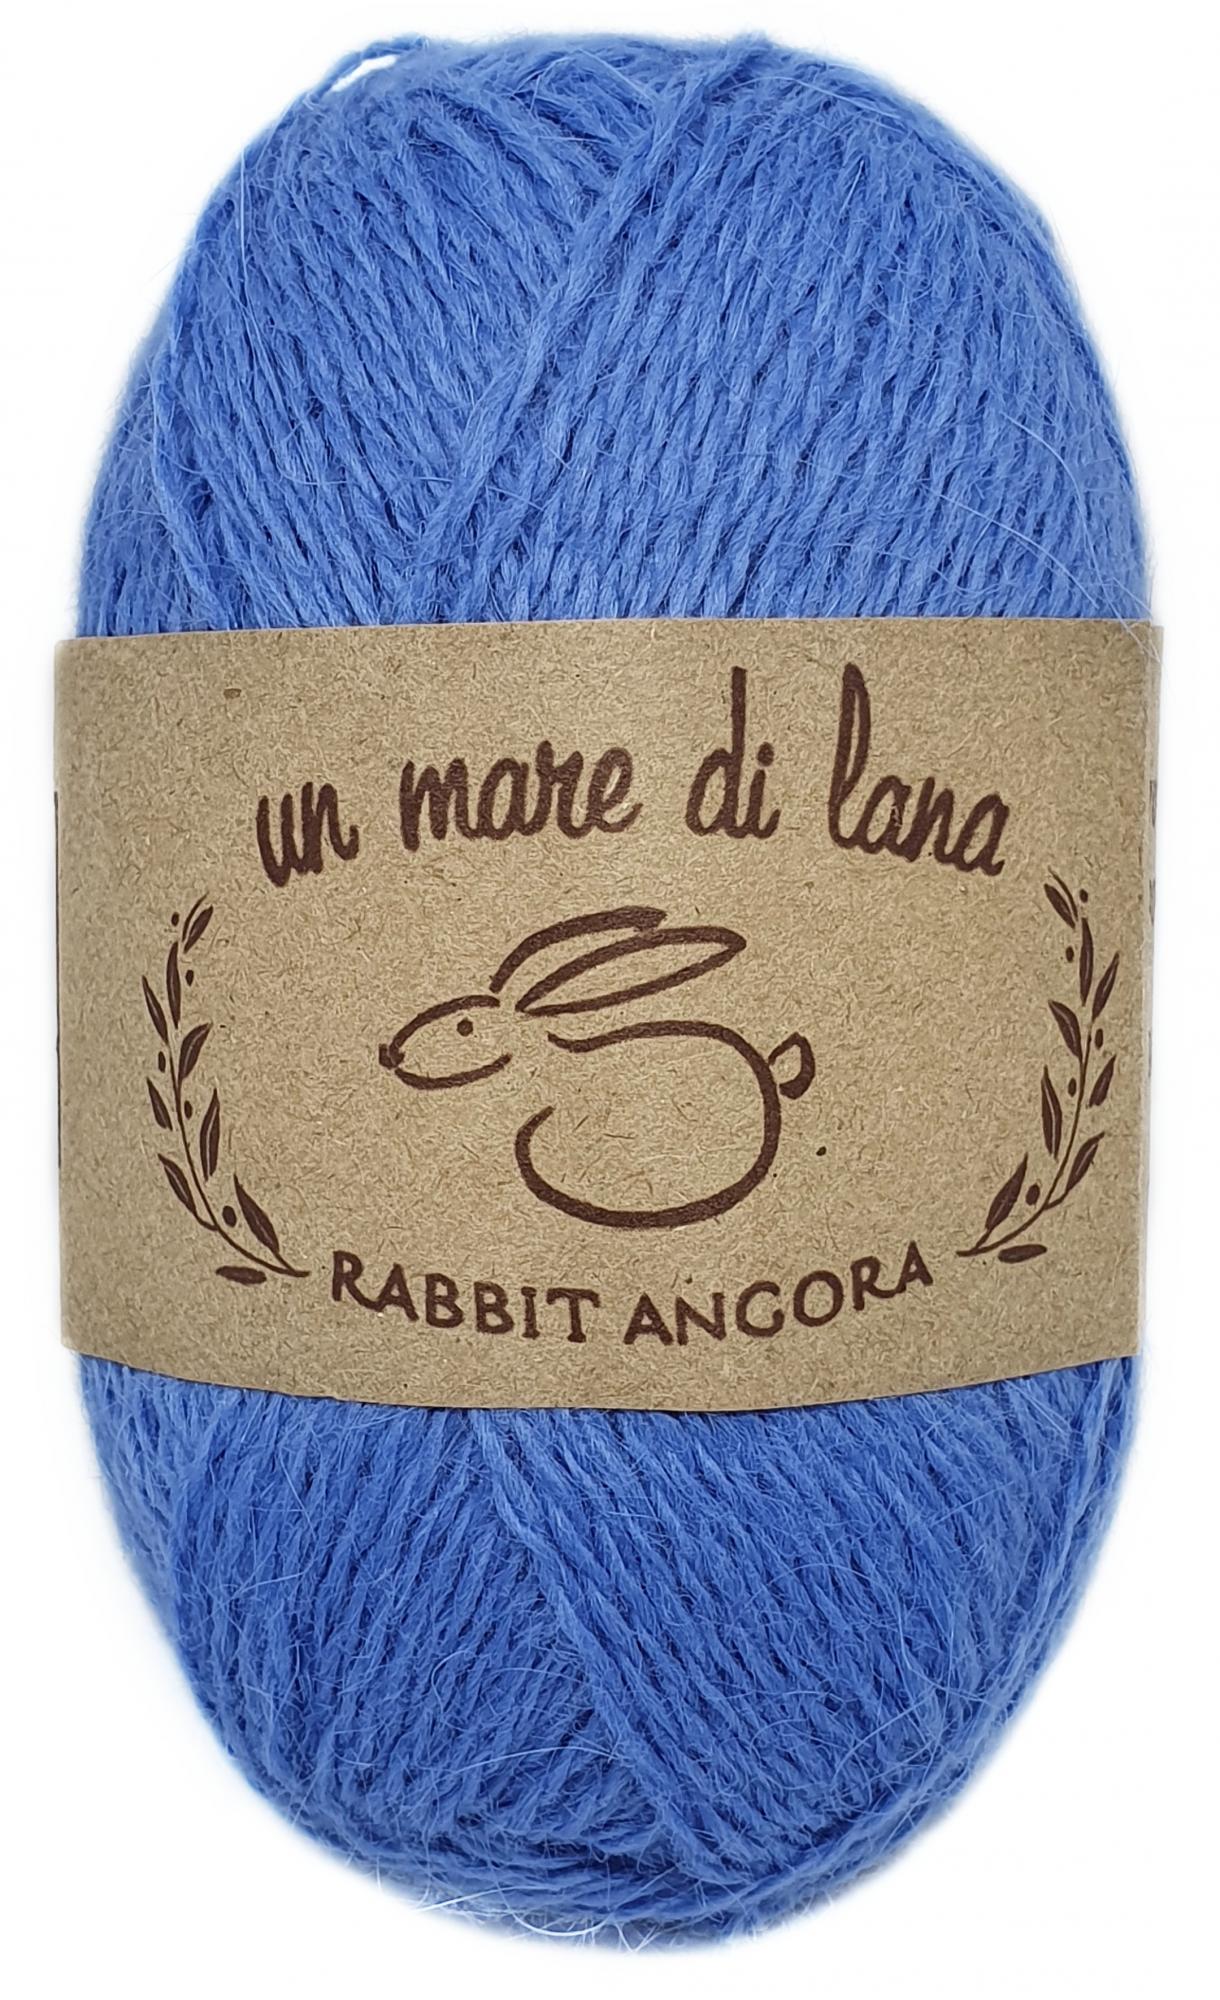 Wool Sea Rabbit Angora (вул сеа Ангора Кролик) 256 - светлый джинс